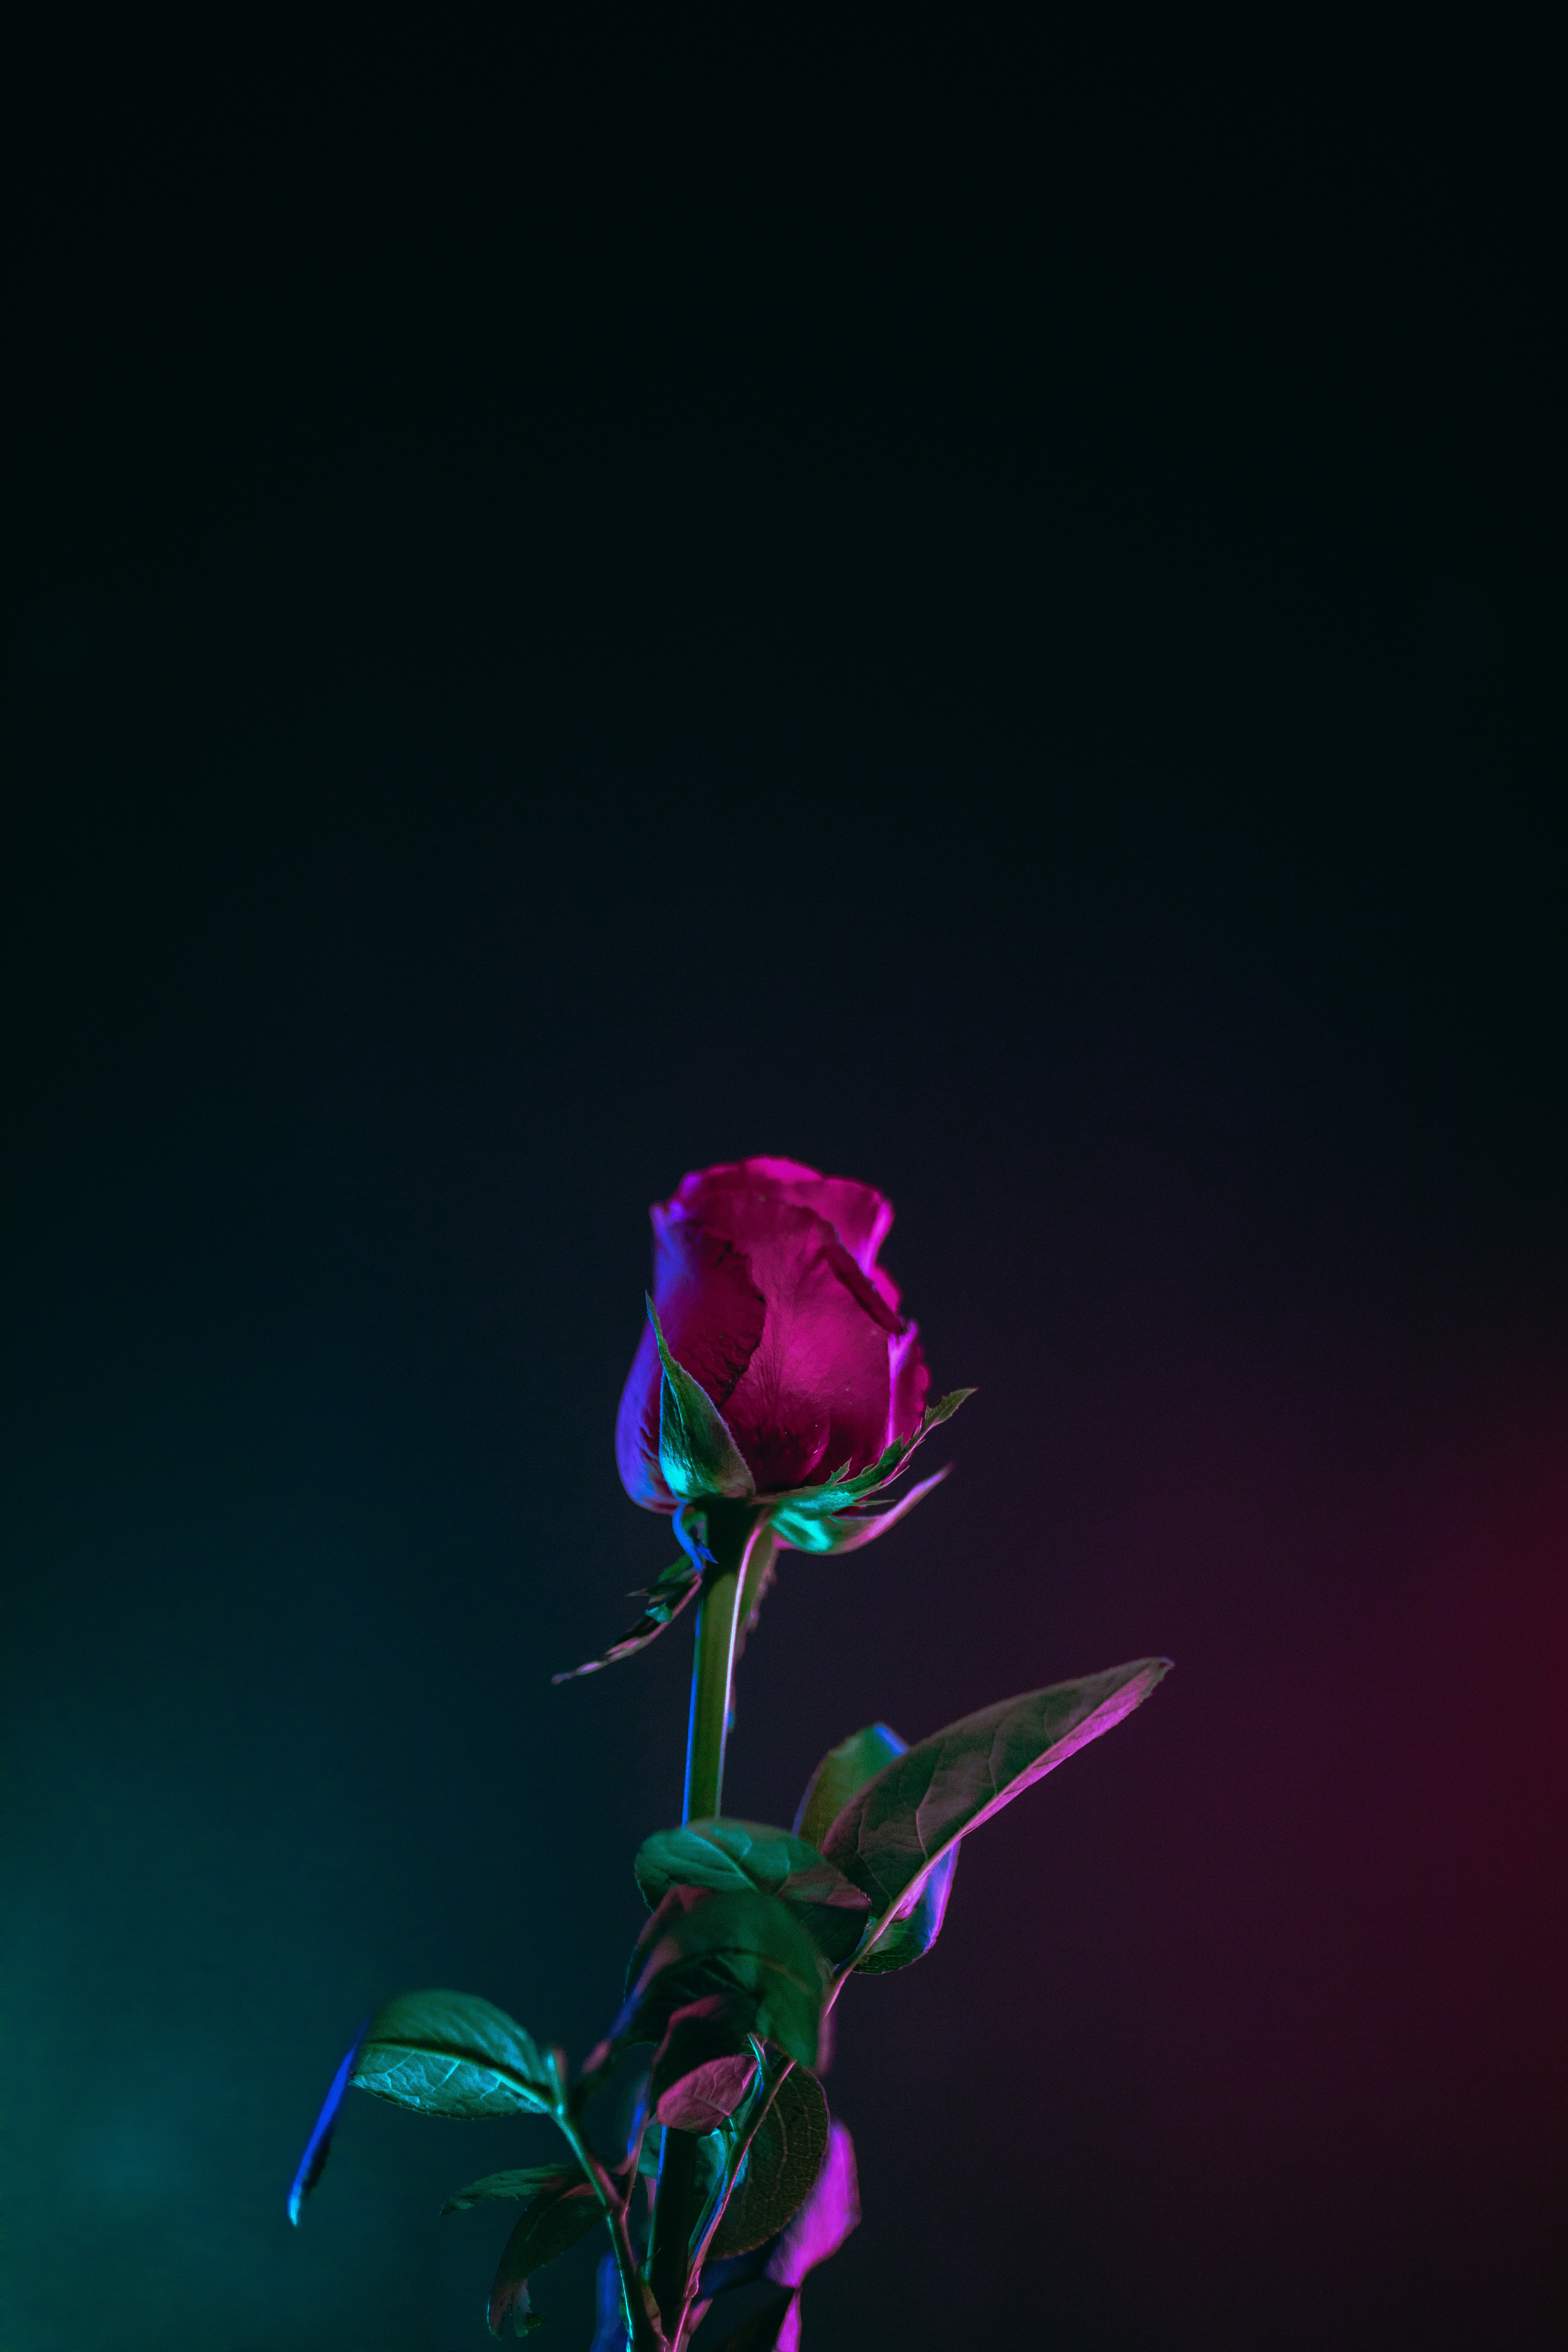 rose flower, stalk, dark background, leaves, flowers, rose, bud, stem